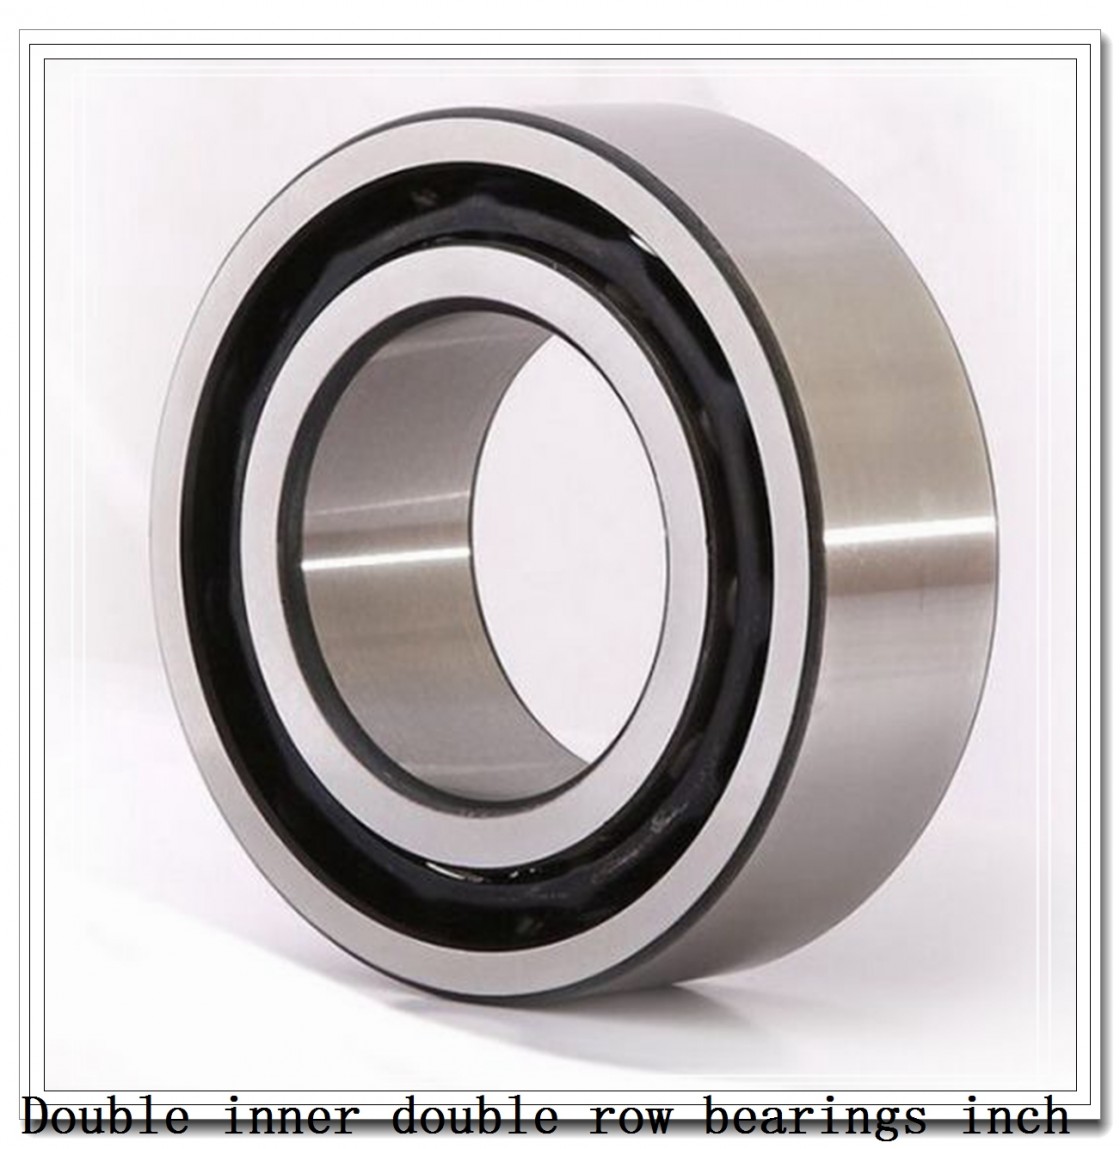 EE655270/655346D Double inner double row bearings inch